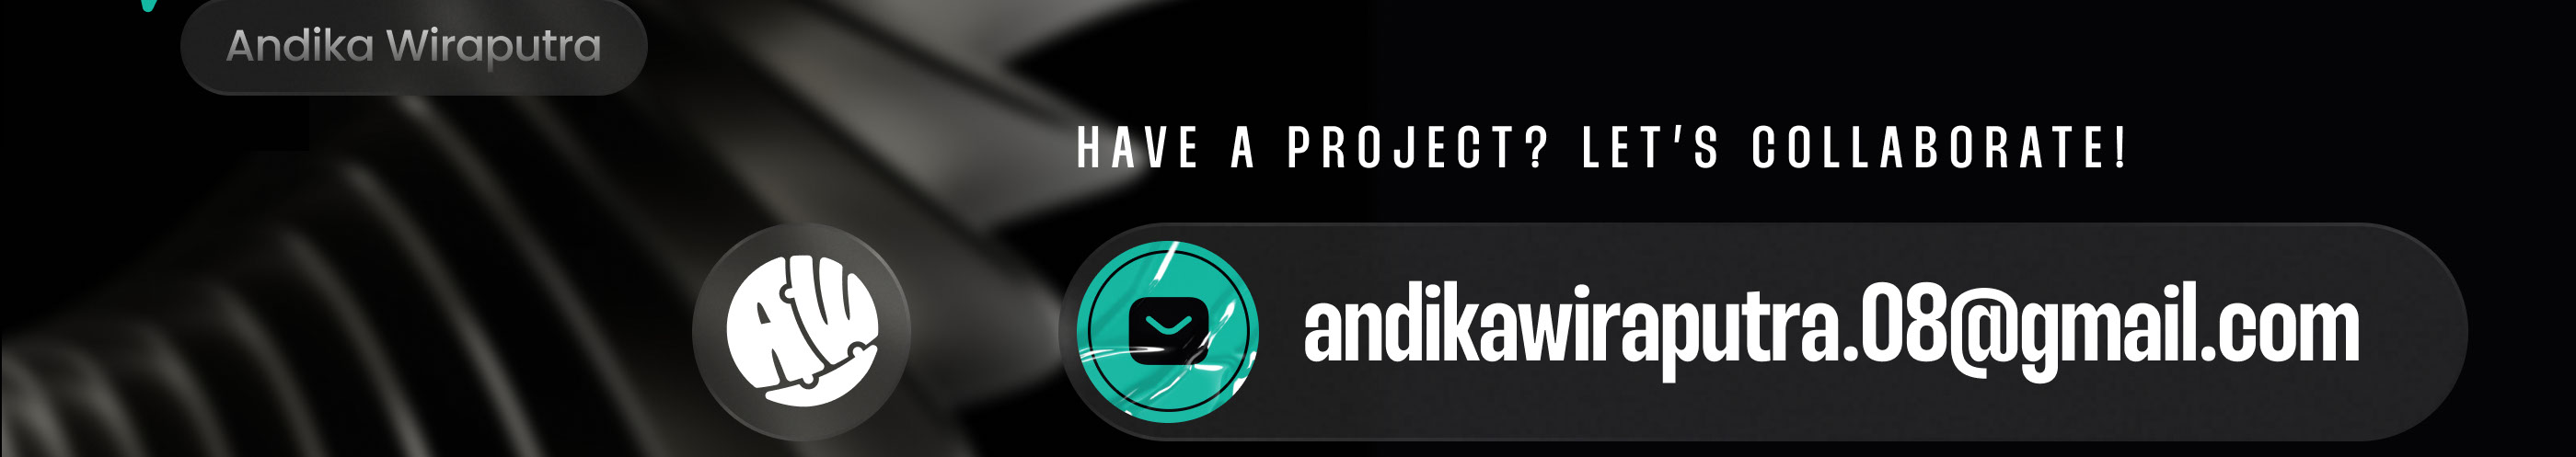 Andika Wiraputra のプロファイルバナー